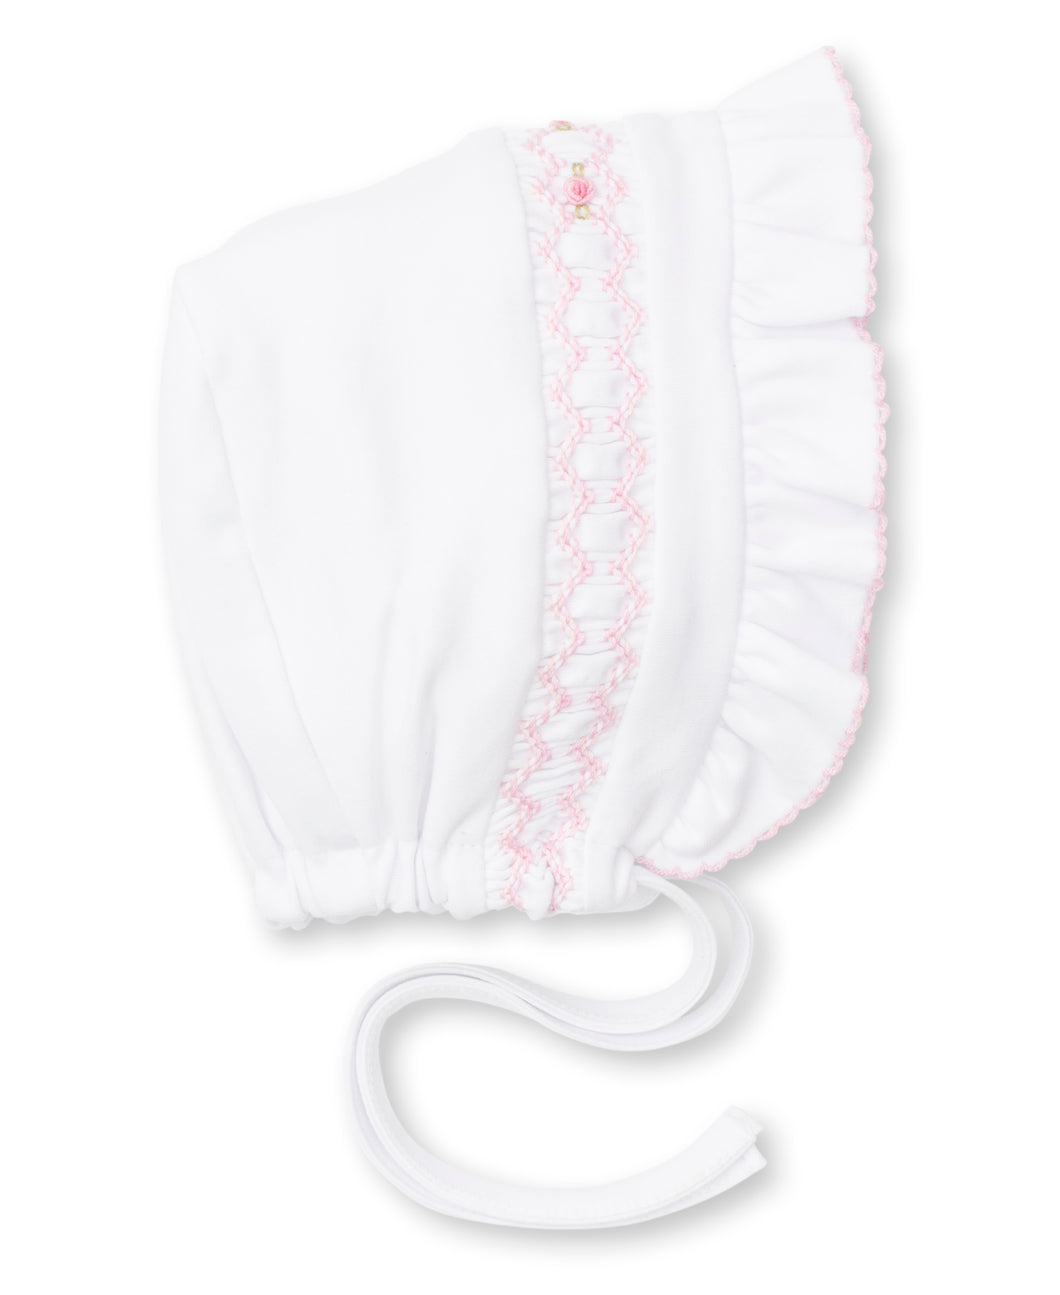 CLB Summer Bishop Smocked Bonnet - White with Pink